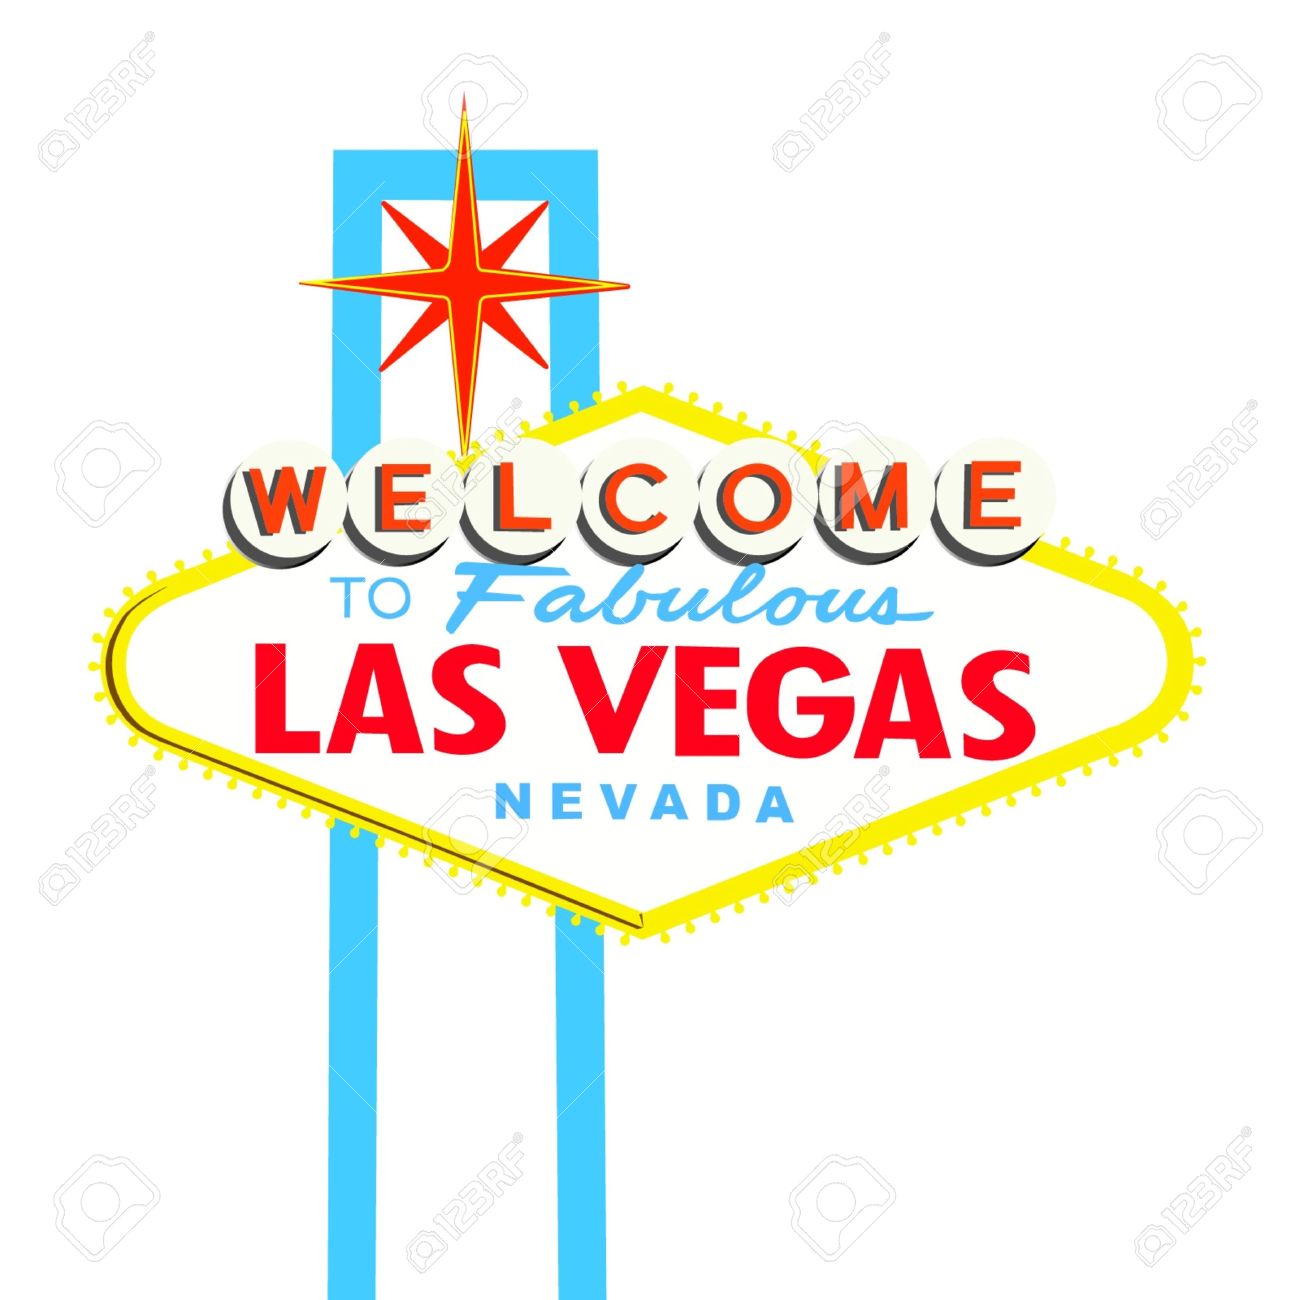 vegas sign: Welcome to Las Ve - Las Vegas Sign Clip Art